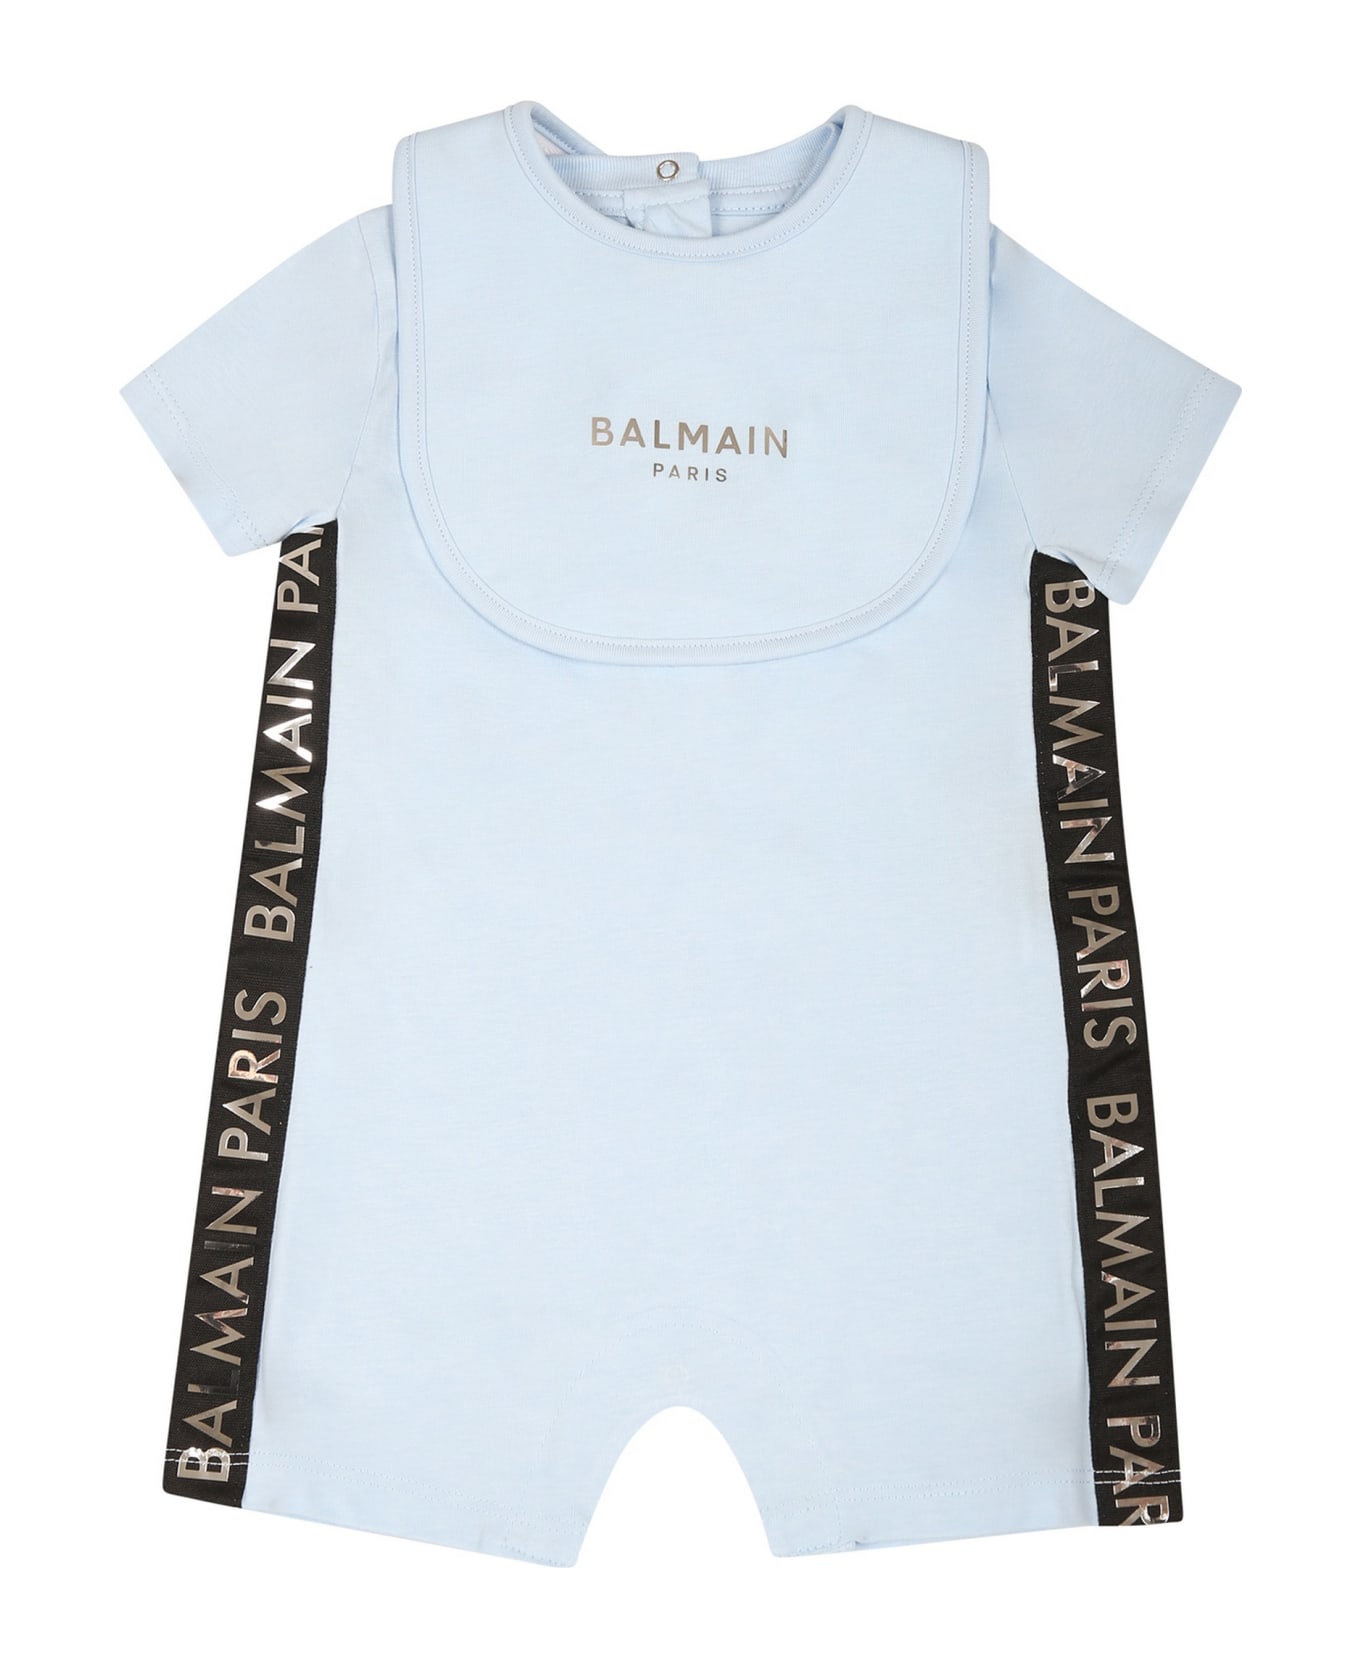 Balmain Light Blue Set For Baby Boy With Logo - Light Blue